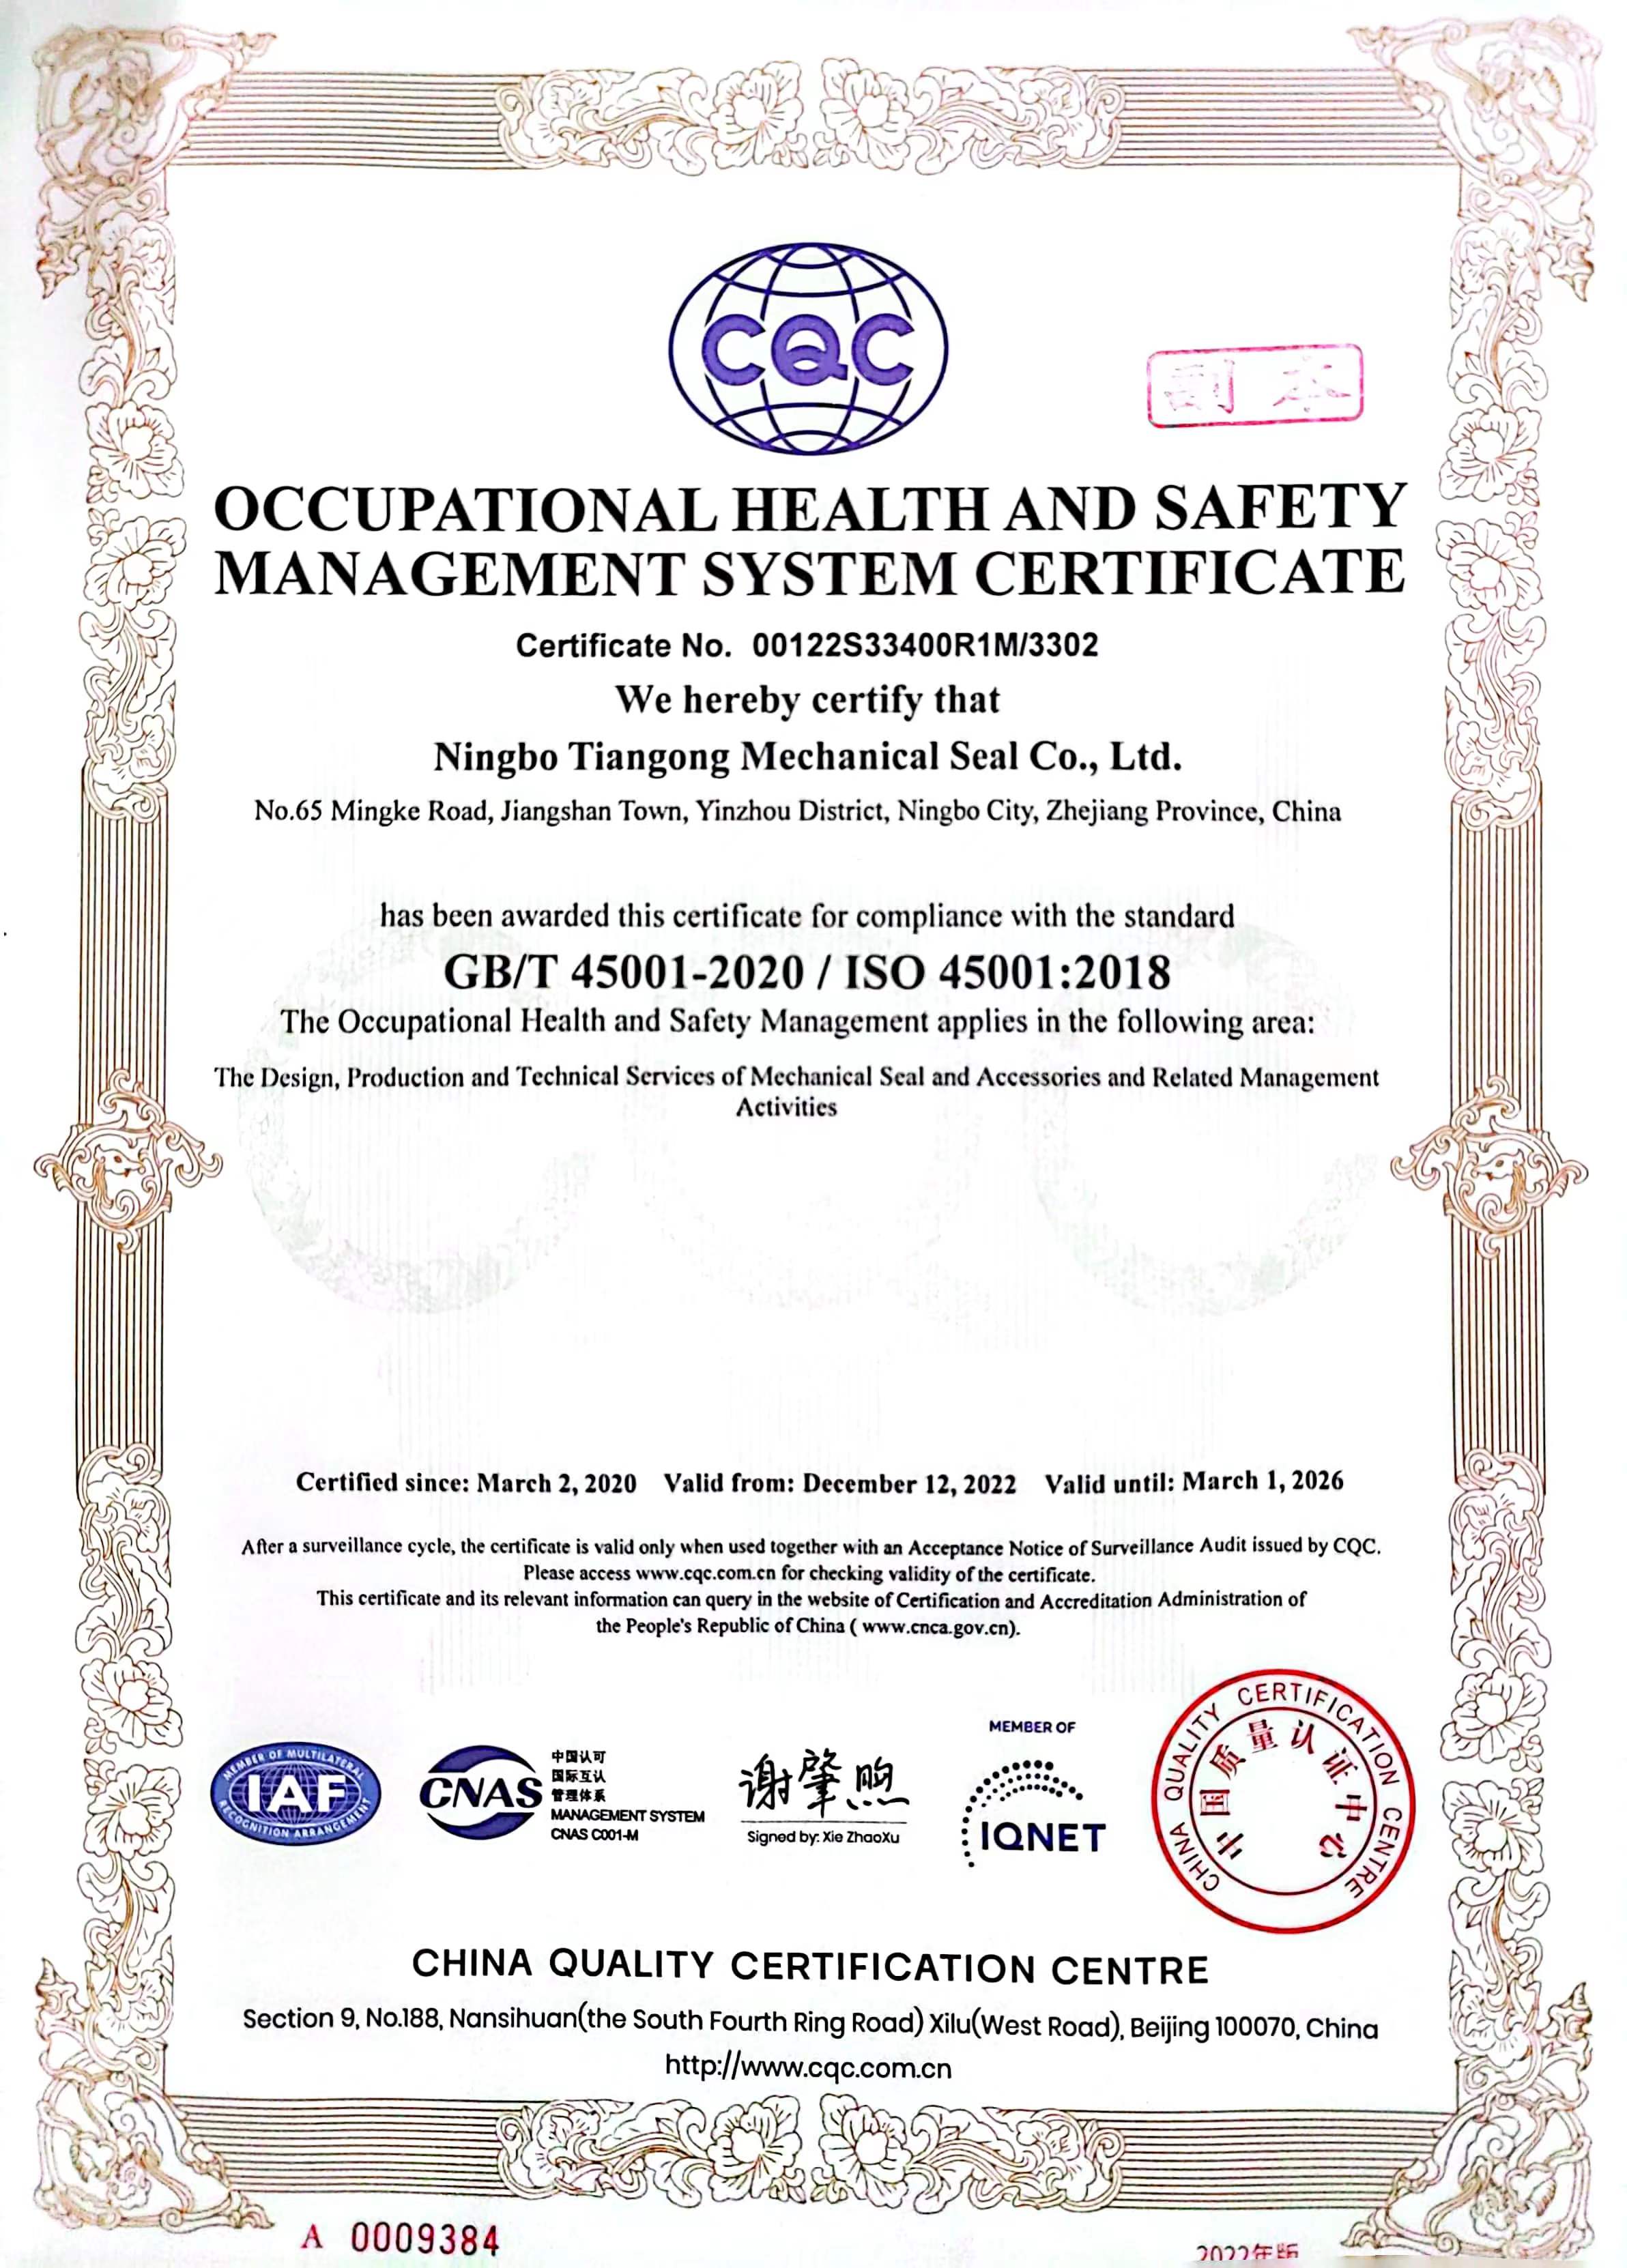 Arbeitsschutzmanagementsystem IS0 45001:2018